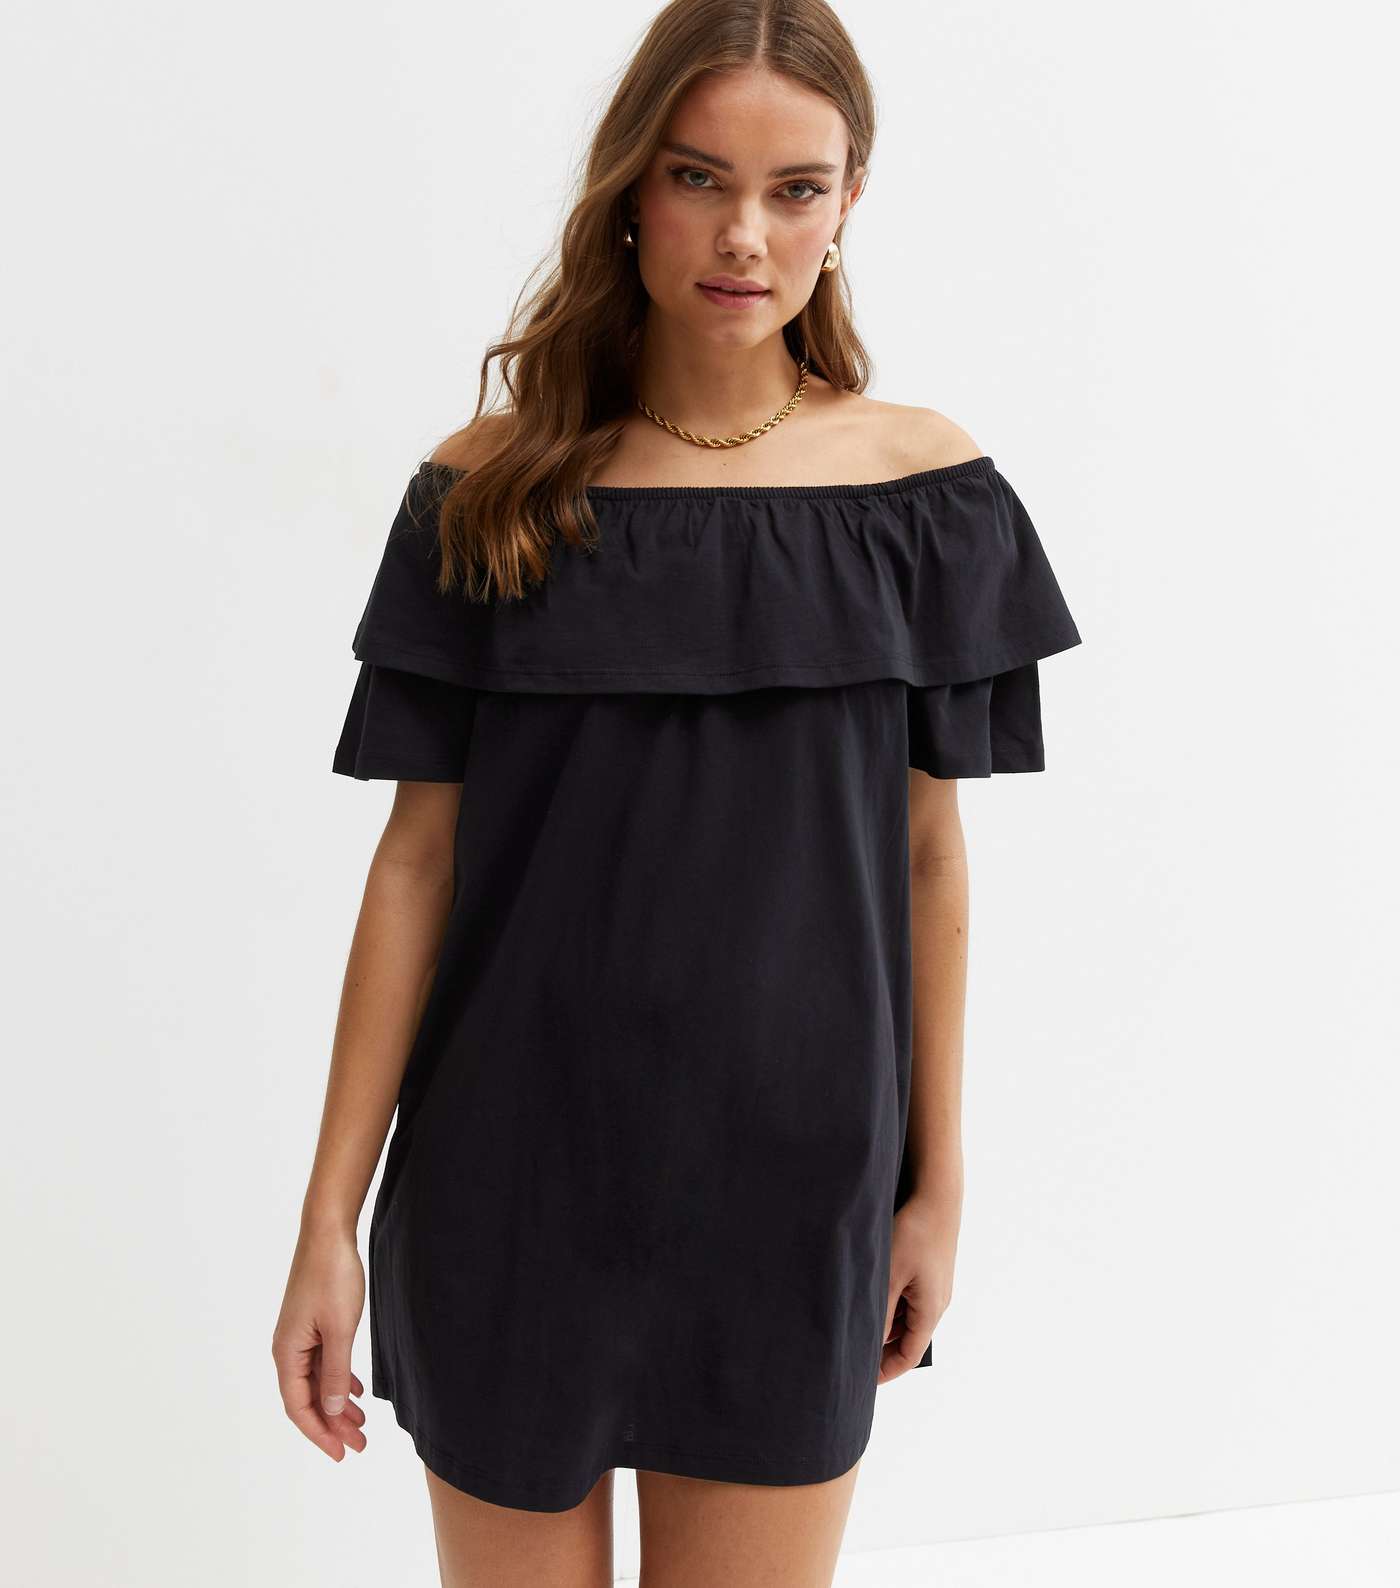 Black Jersey Frill Bardot Mini Dress Image 2